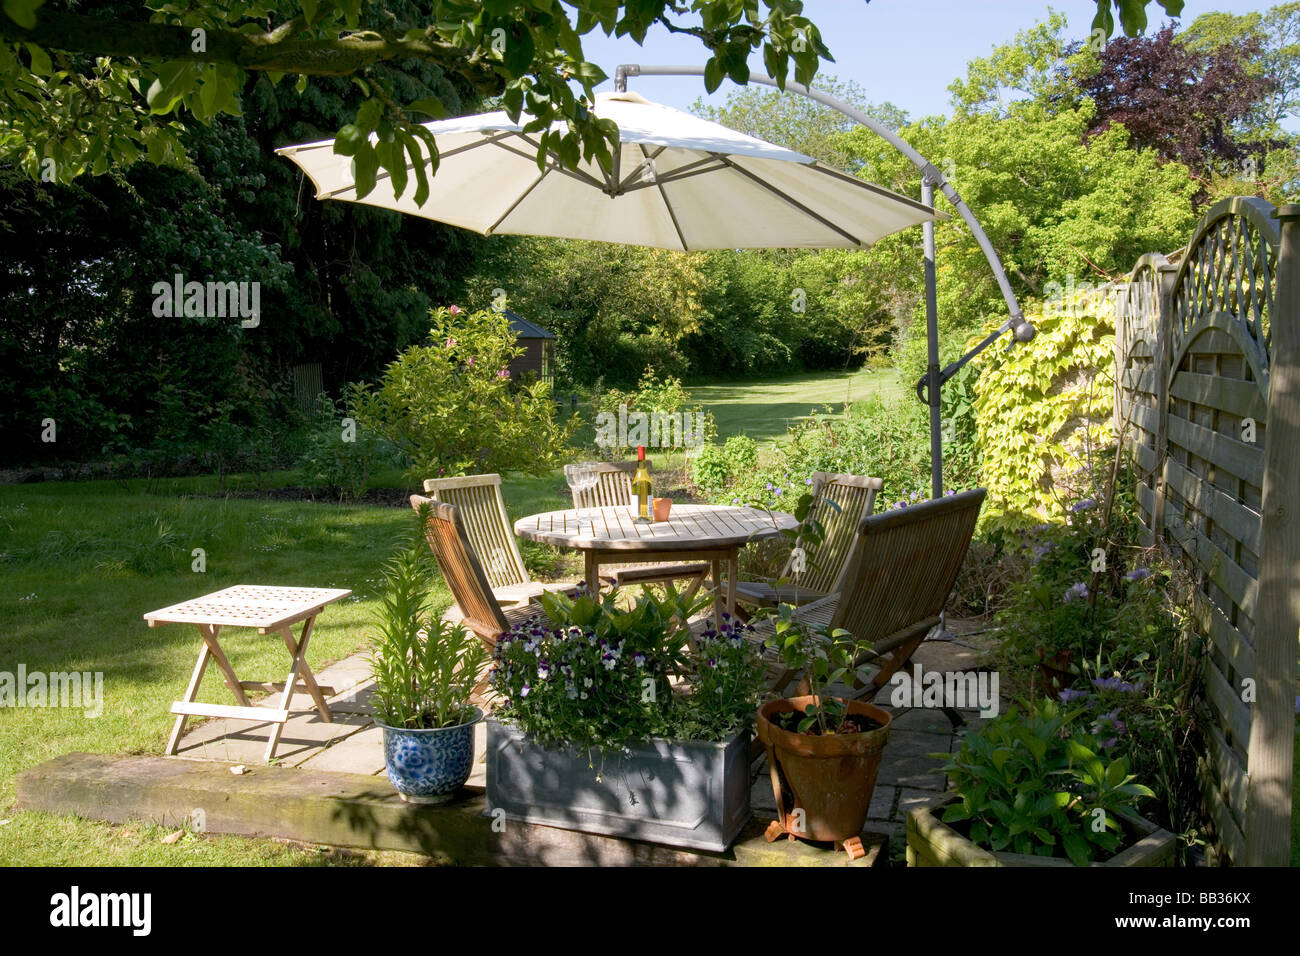 UK. A patio terrace garden table chairs and parasol sun shade ...